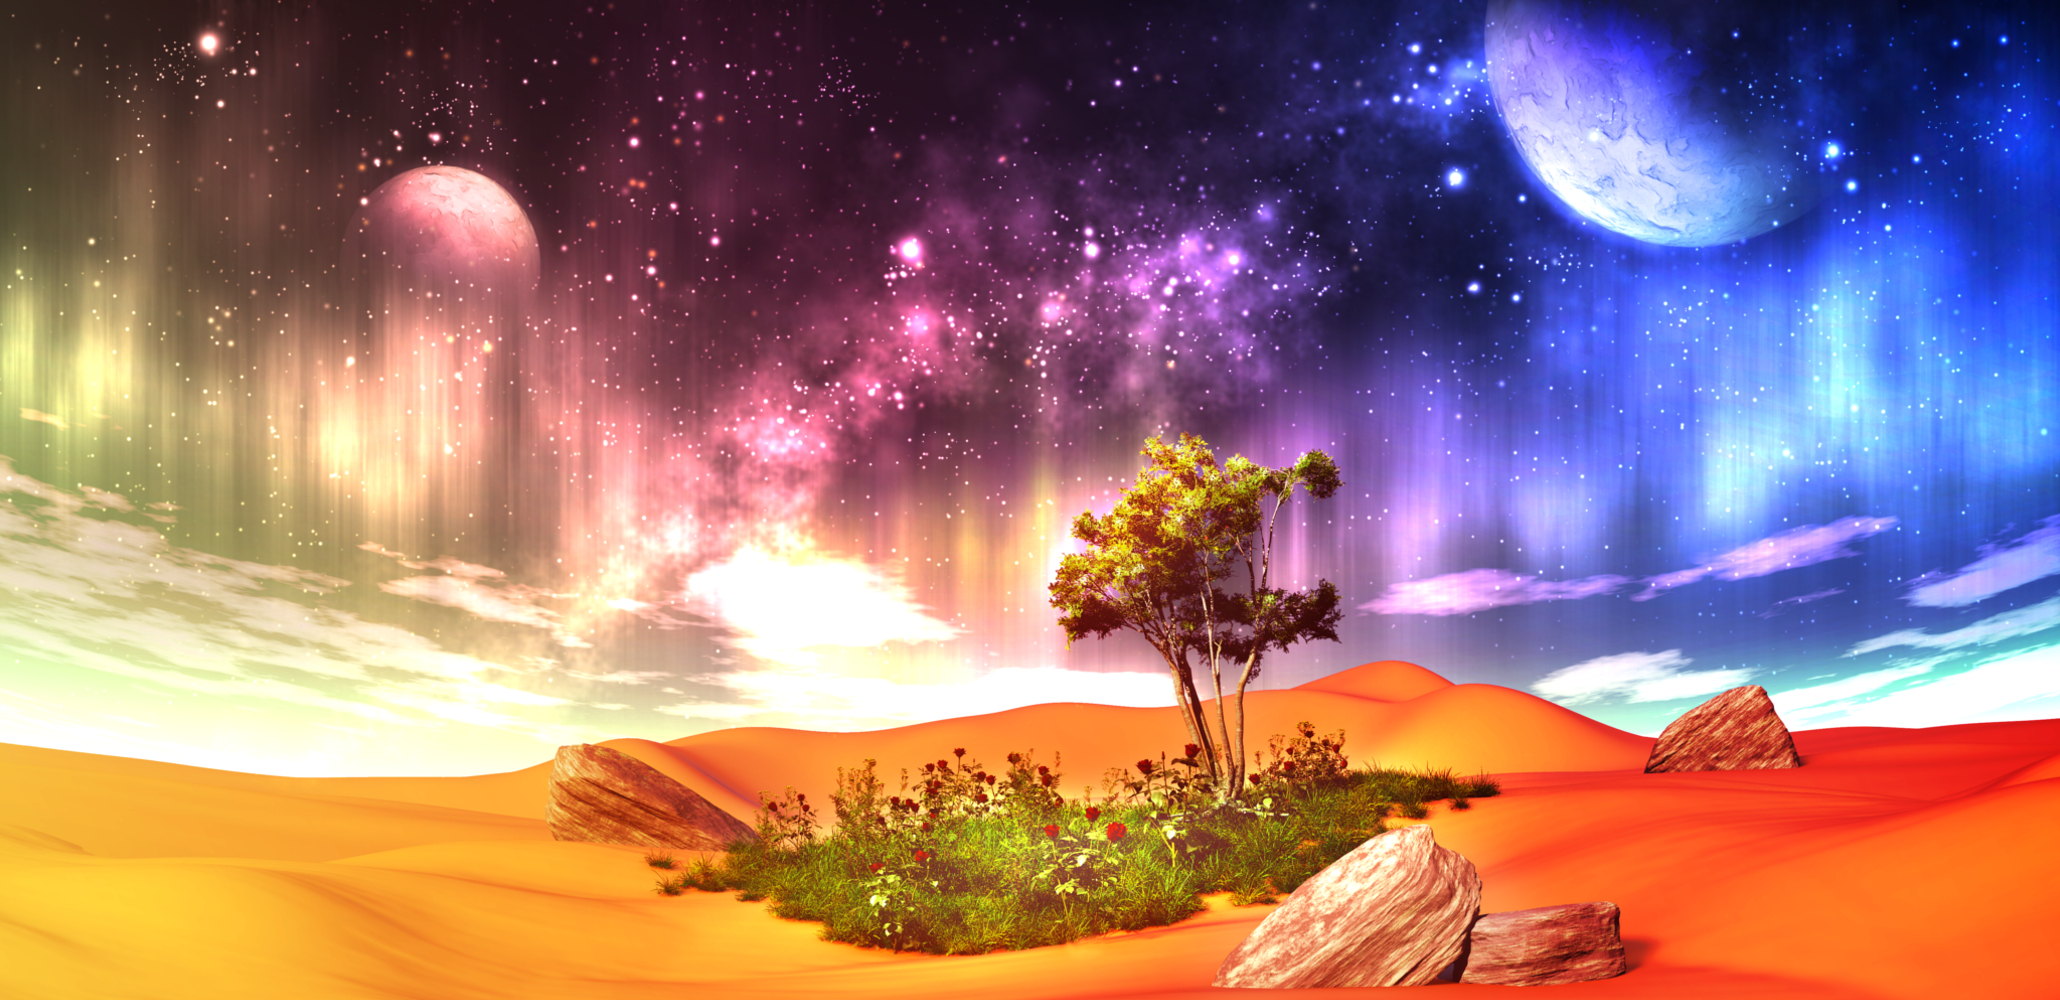 original, 3d, Clouds, Desert, Flowers, Grass, Landscape, Moon, Original, Scenic, Sky, Stars, Tree, Y k Wallpaper